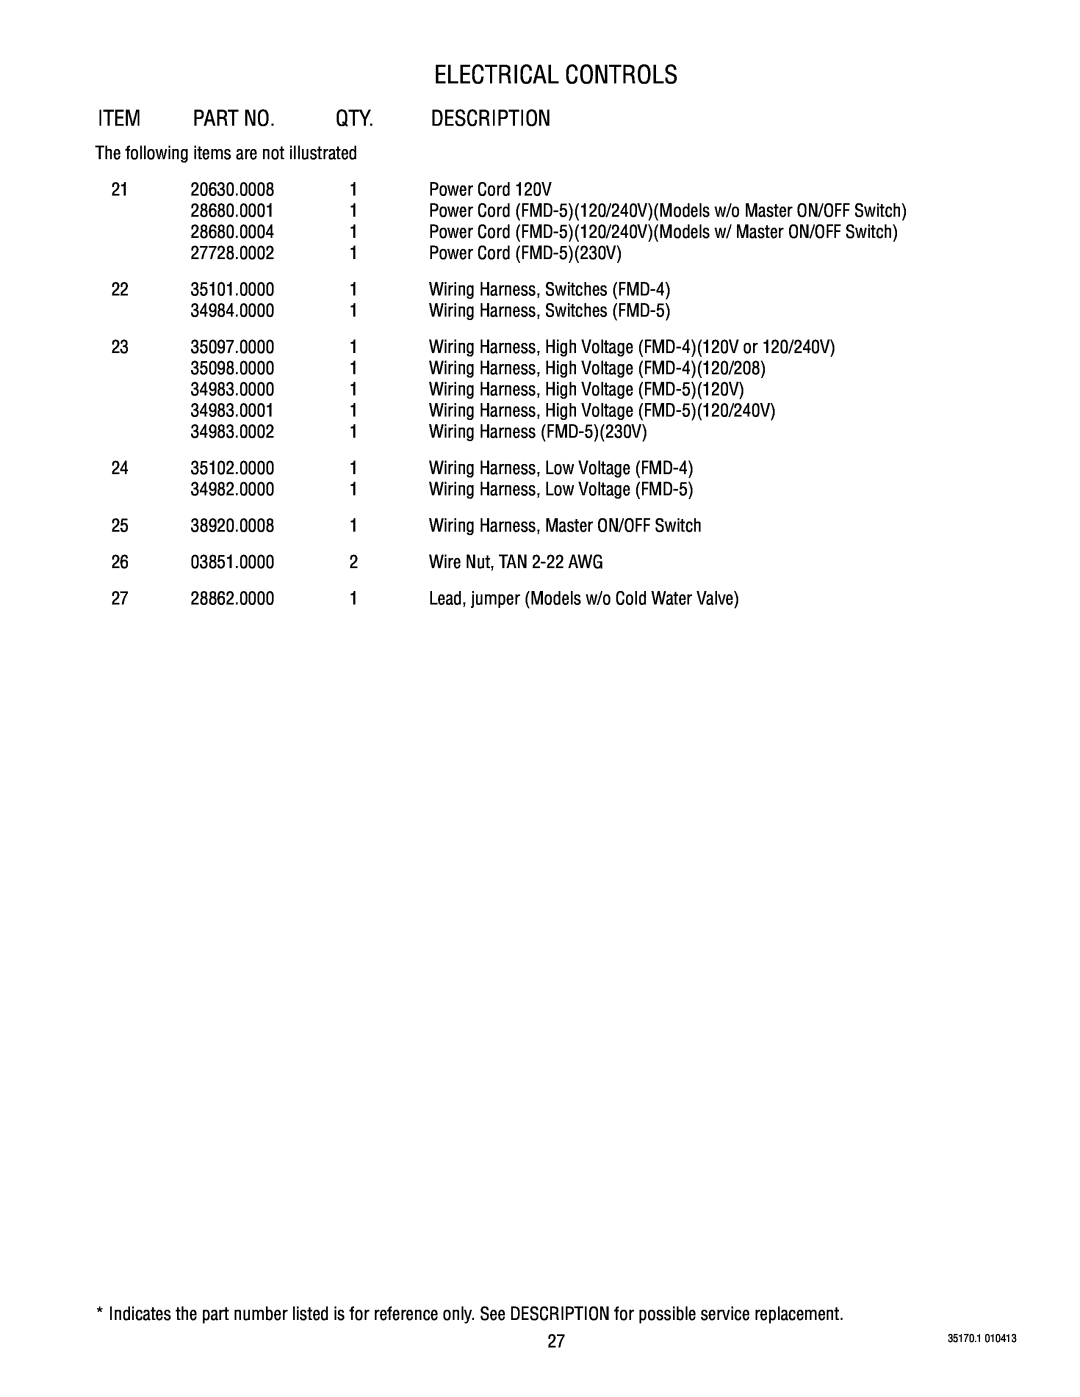 Bunn FMD-5 specifications Electrical Controls, Description 